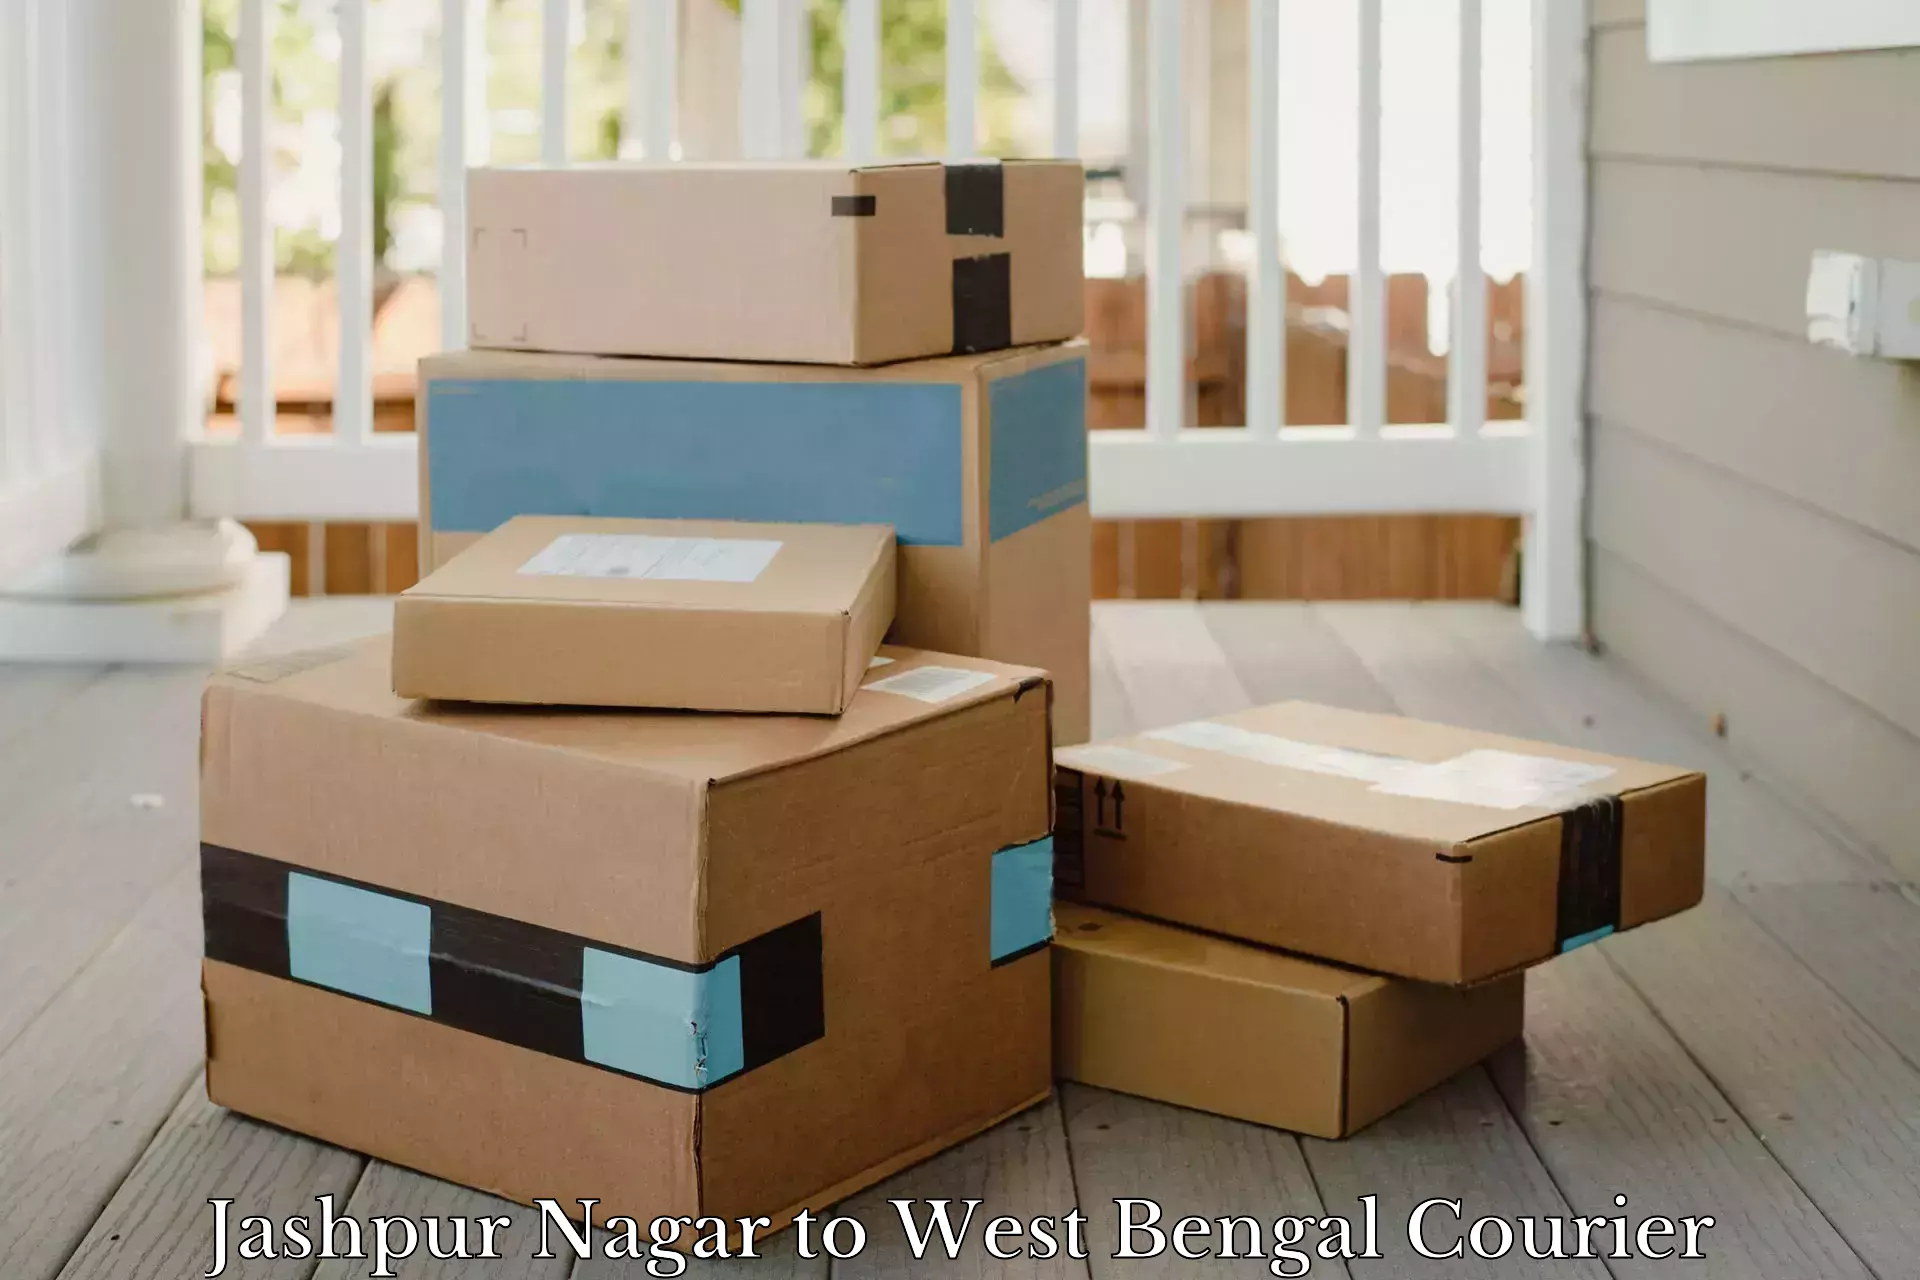 Business delivery service Jashpur Nagar to West Bengal